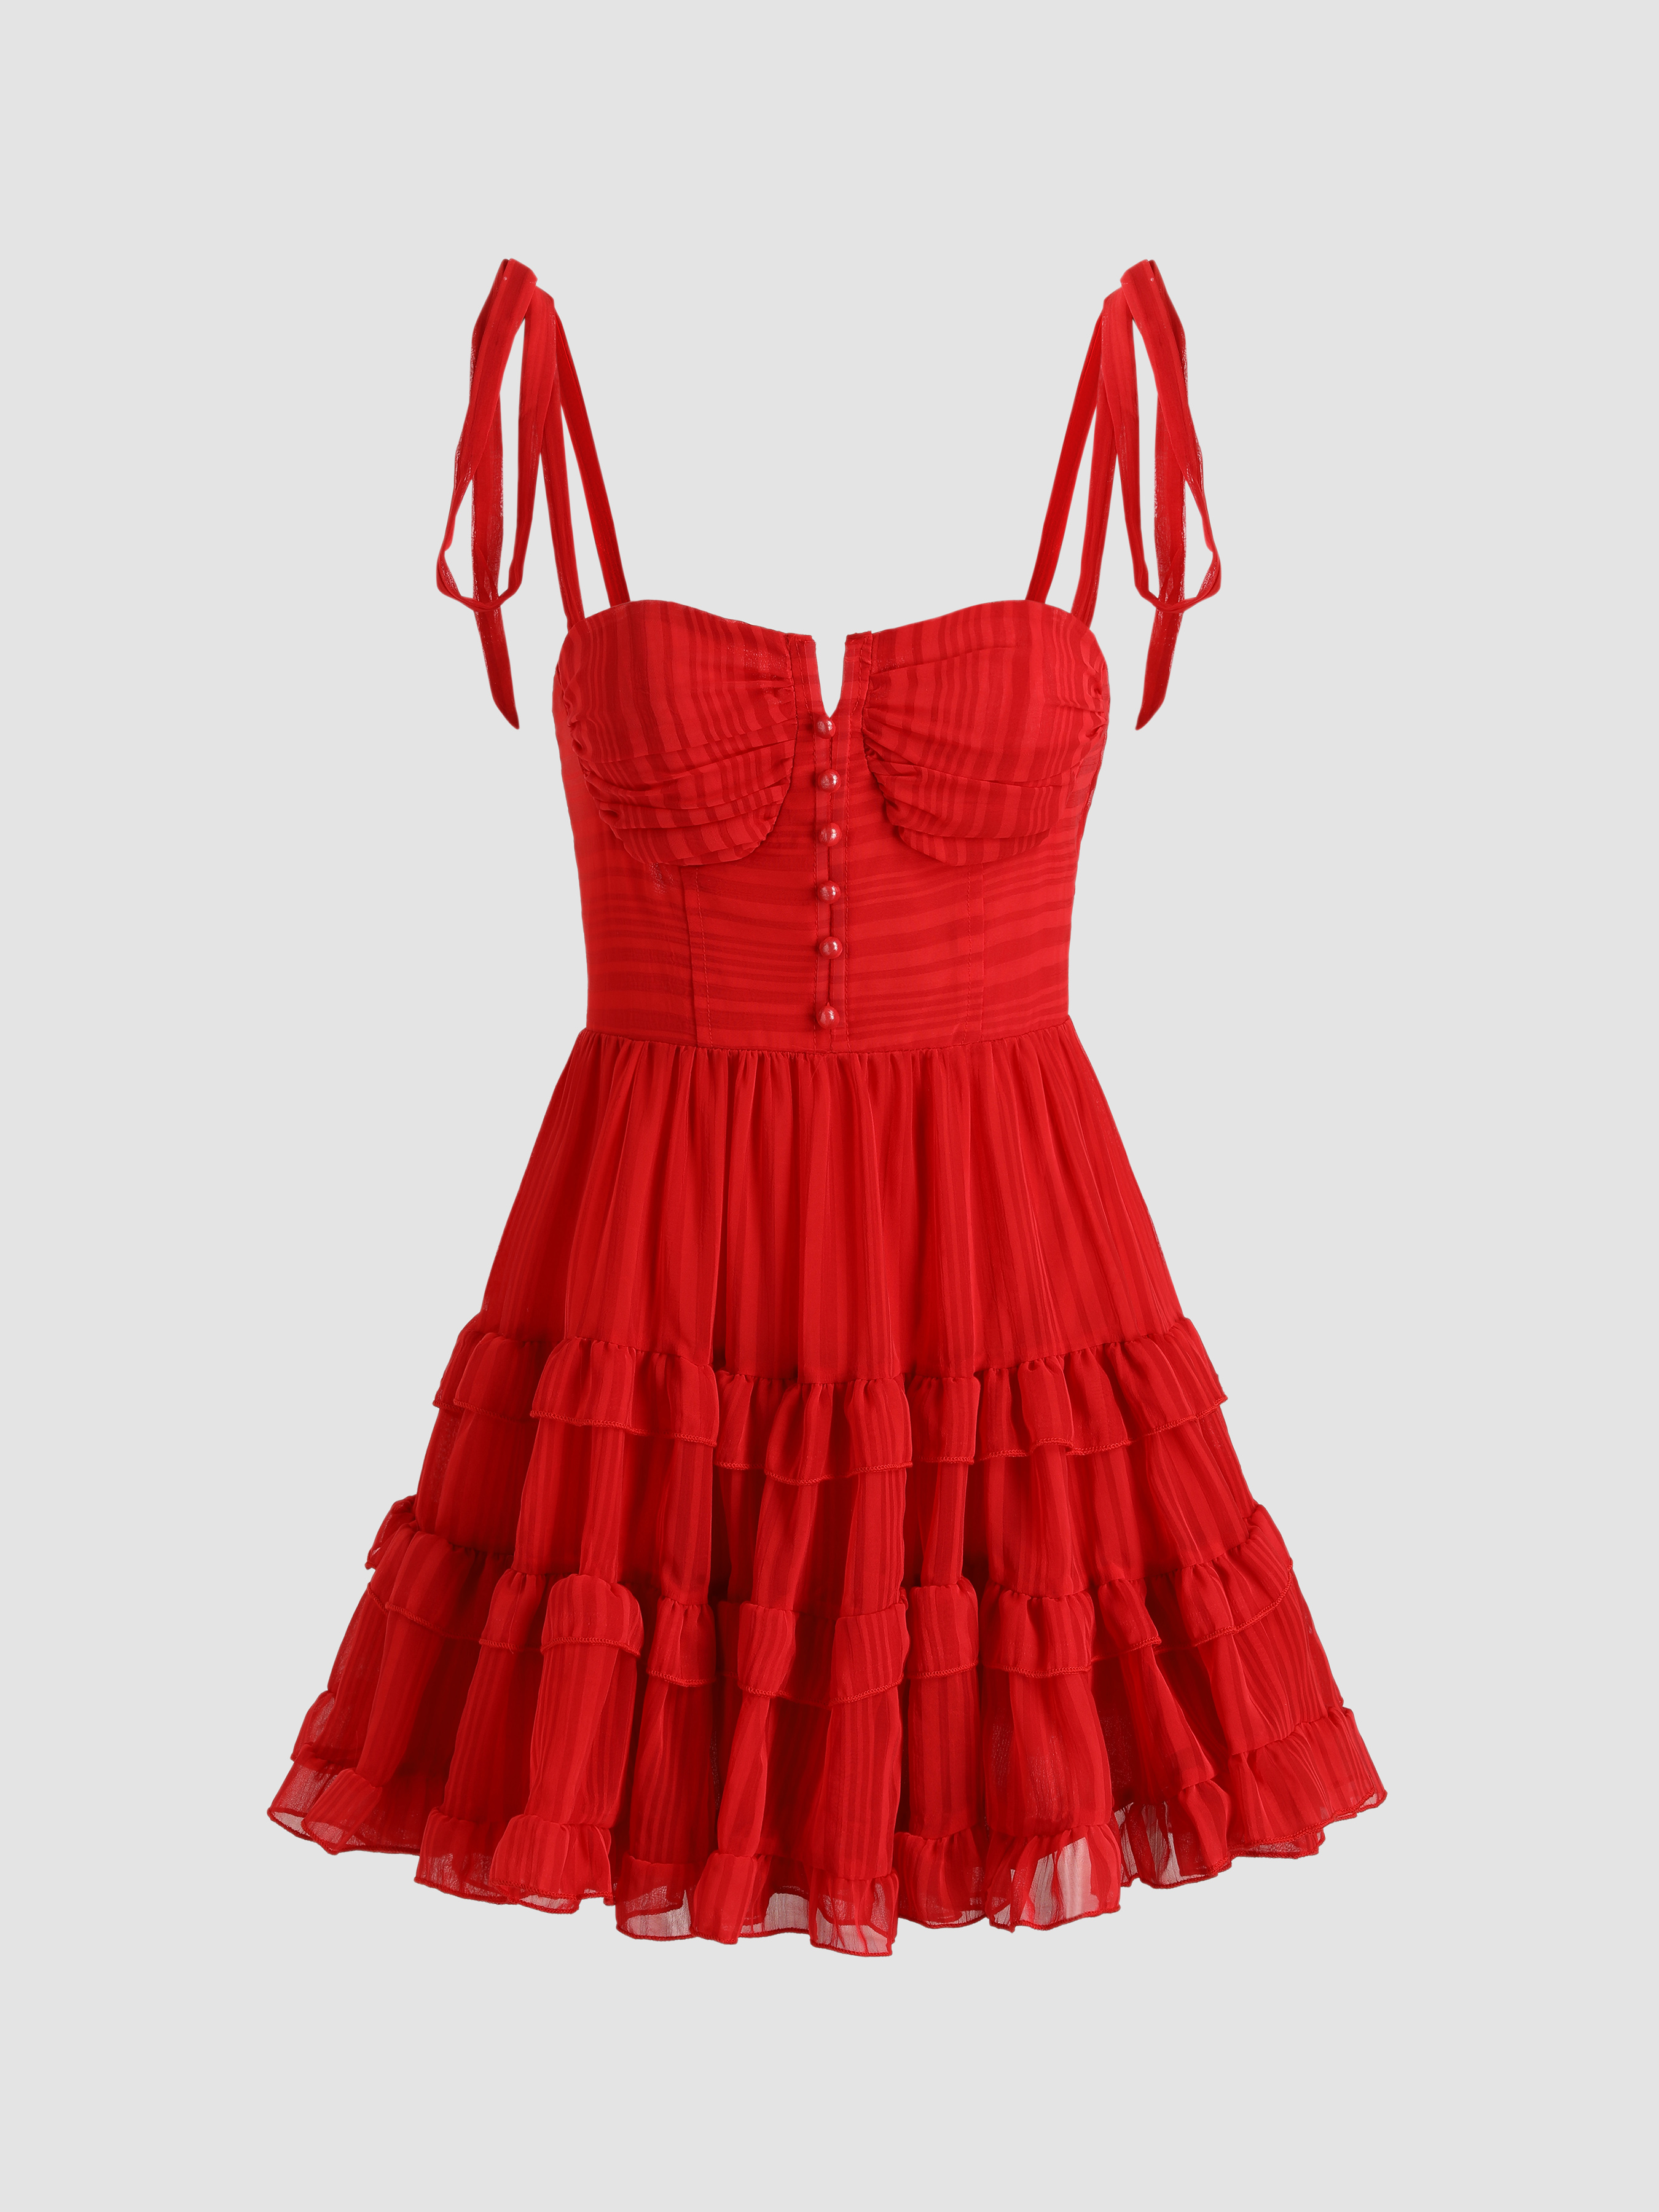 Beetlejuice Lydia's Iconic Ruffled Red Dress